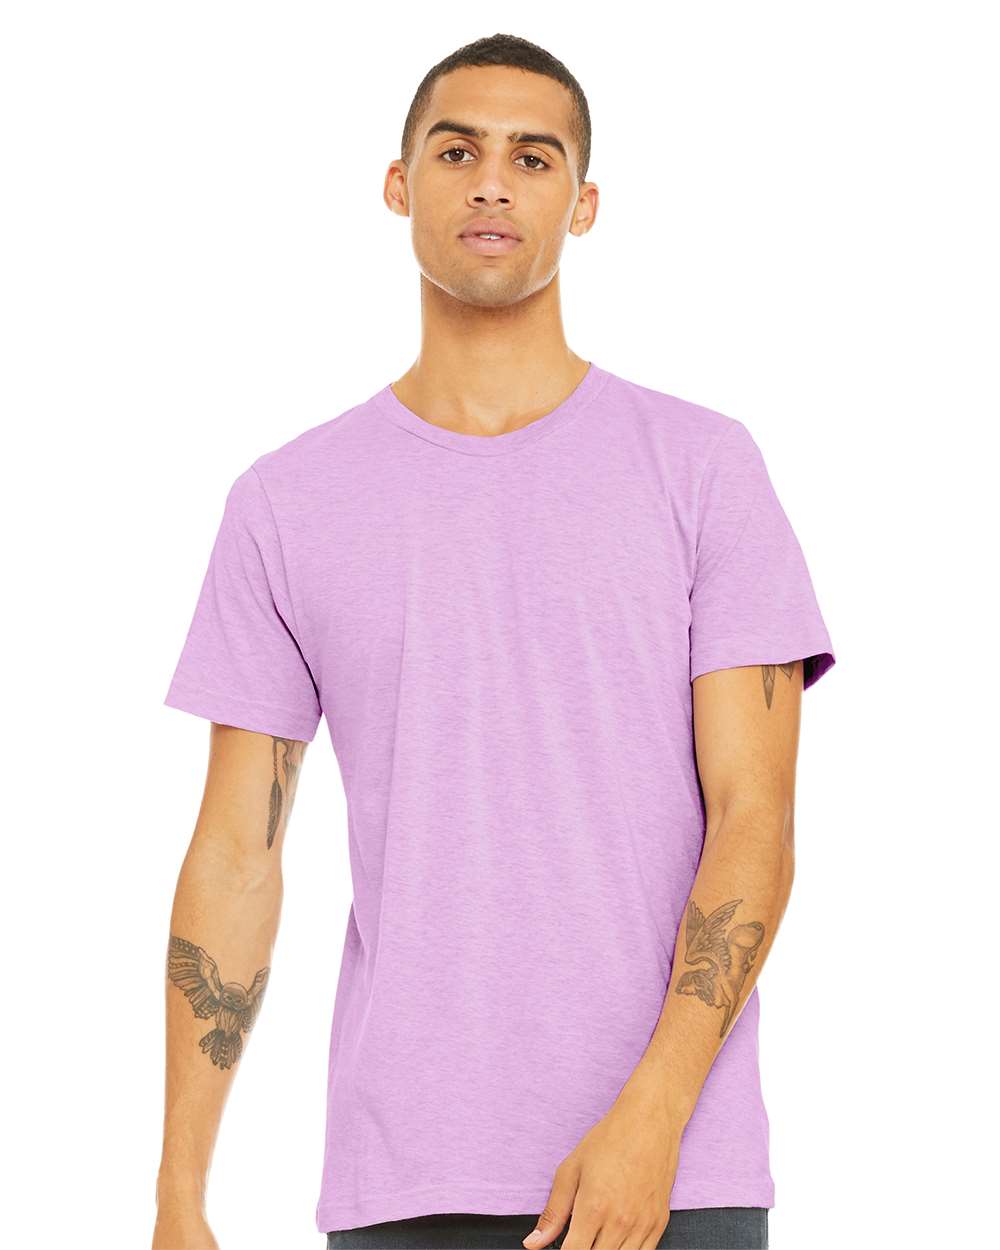 Bella Canvas 3001c Soft Pink Unisex Jersey T Shirt